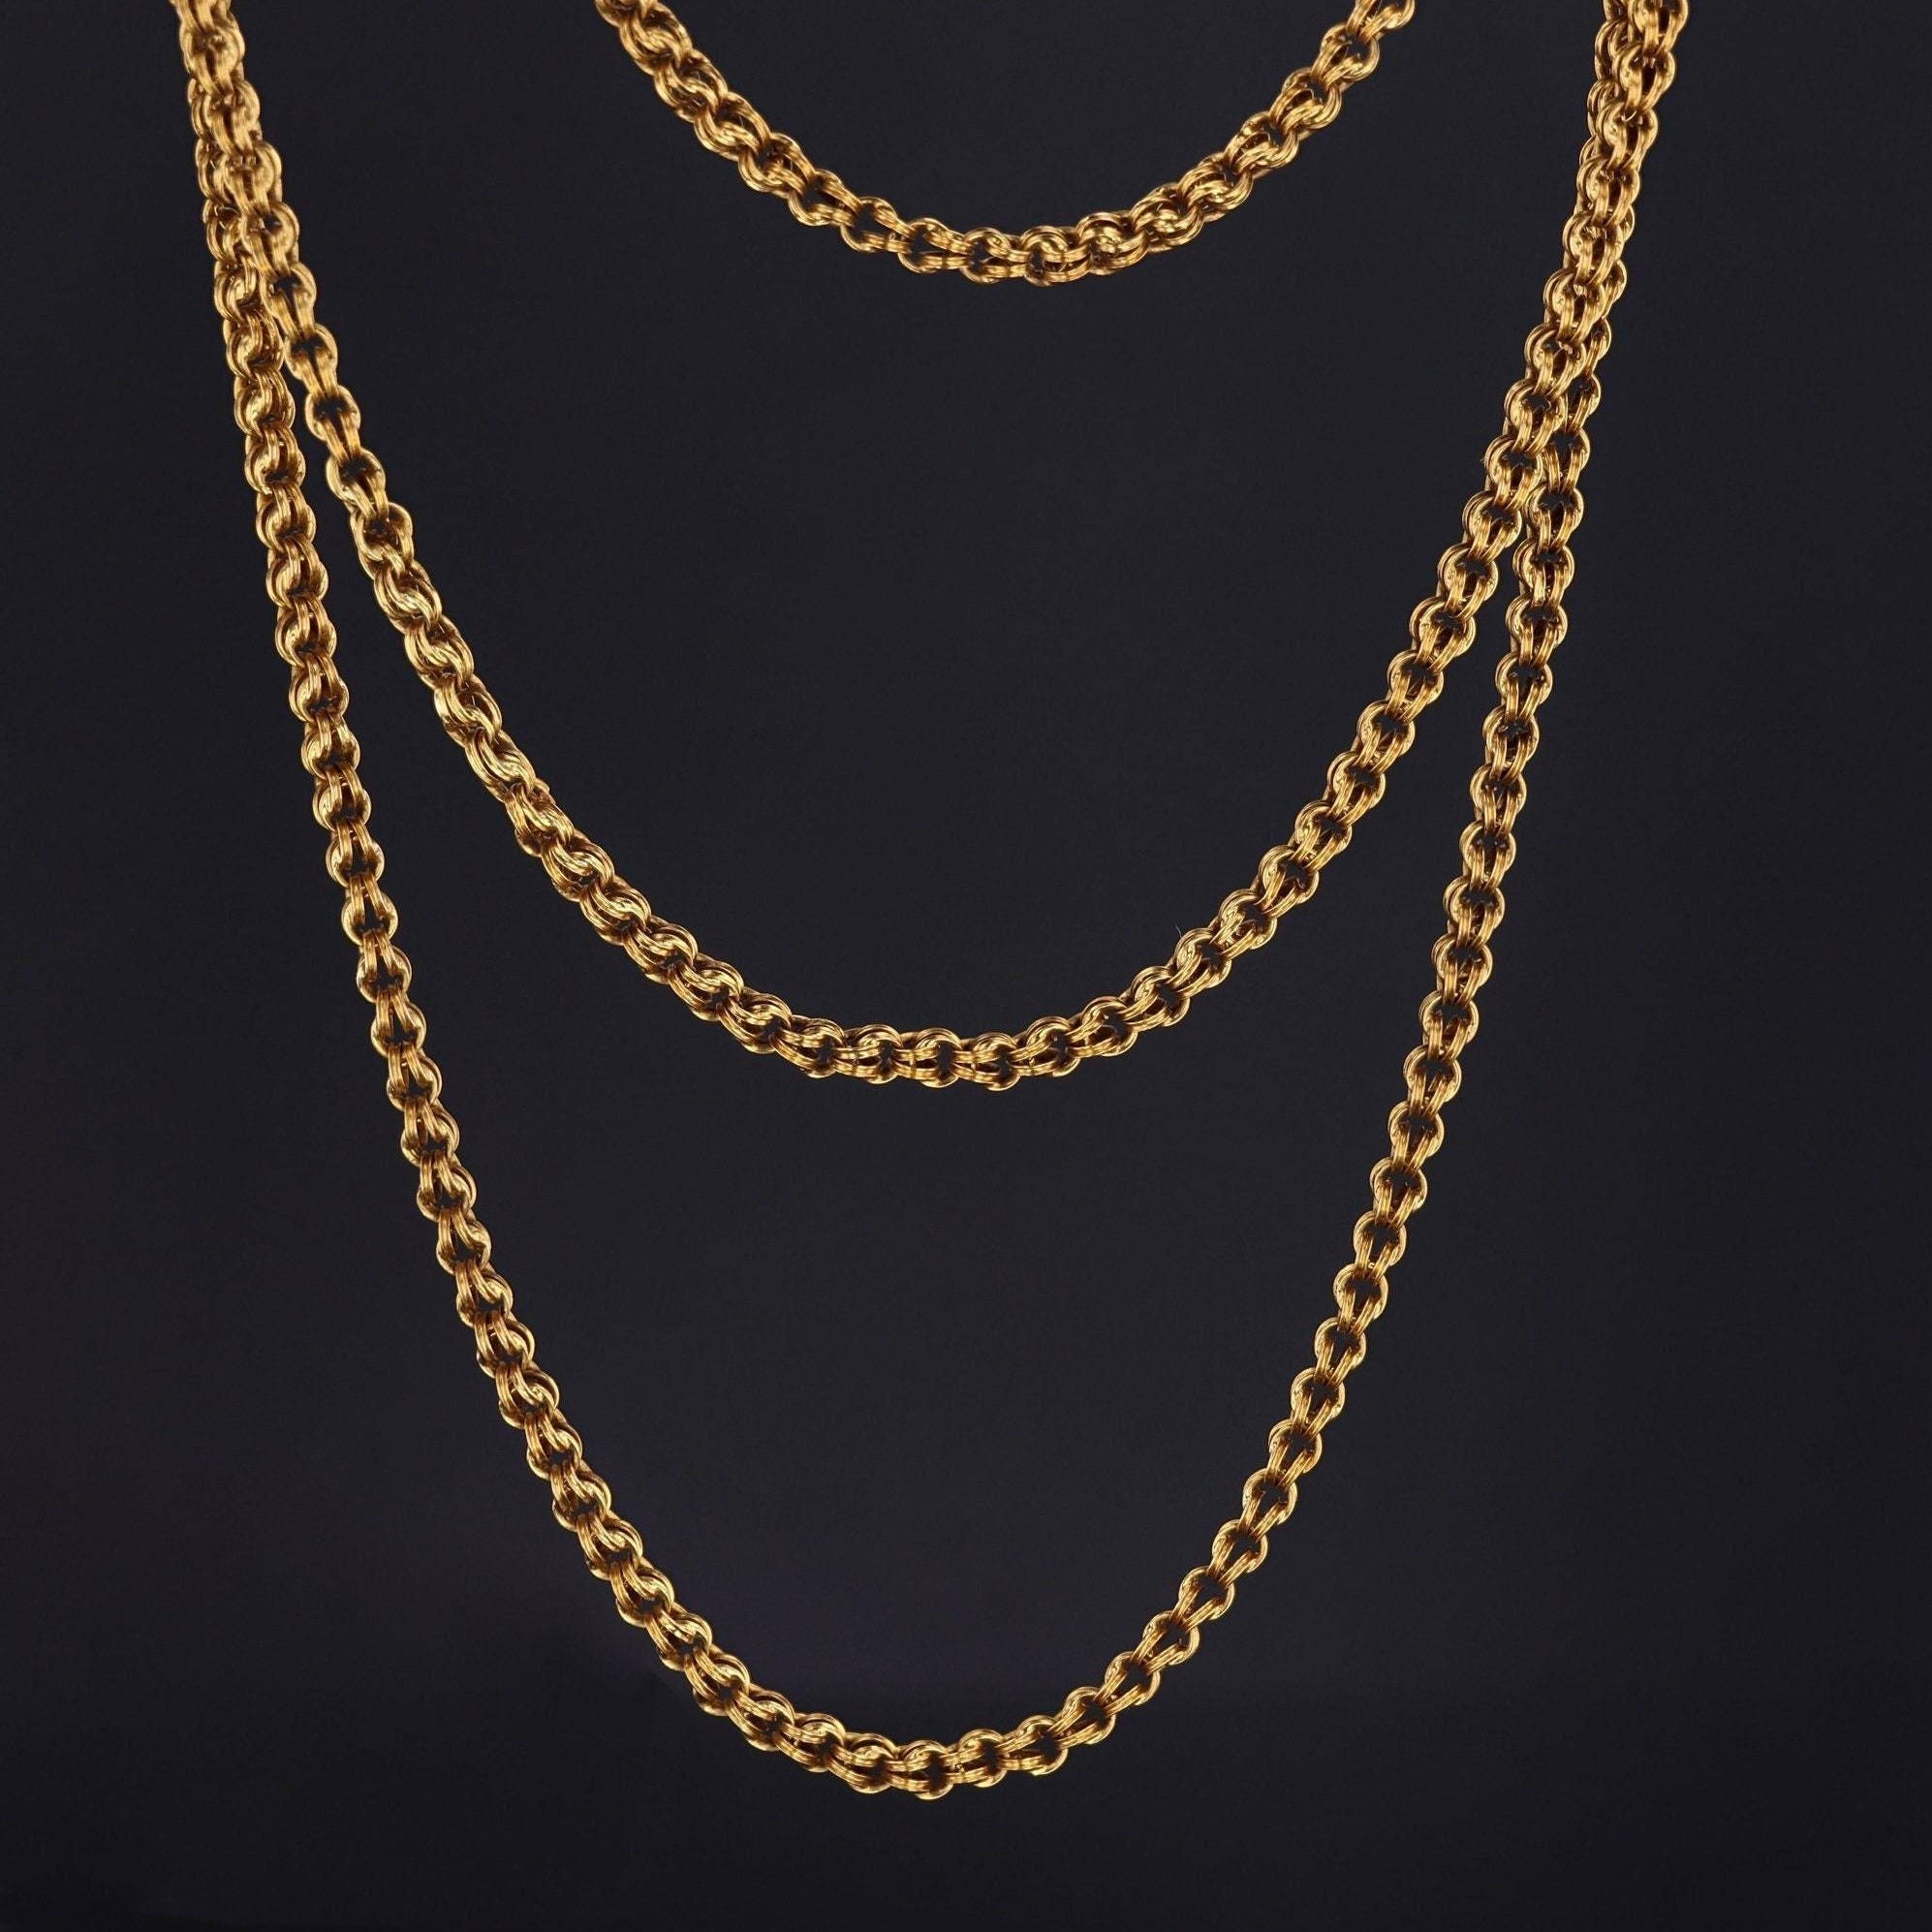 Antique 14k Gold Chain | 14k Gold Fancy Link Chain 